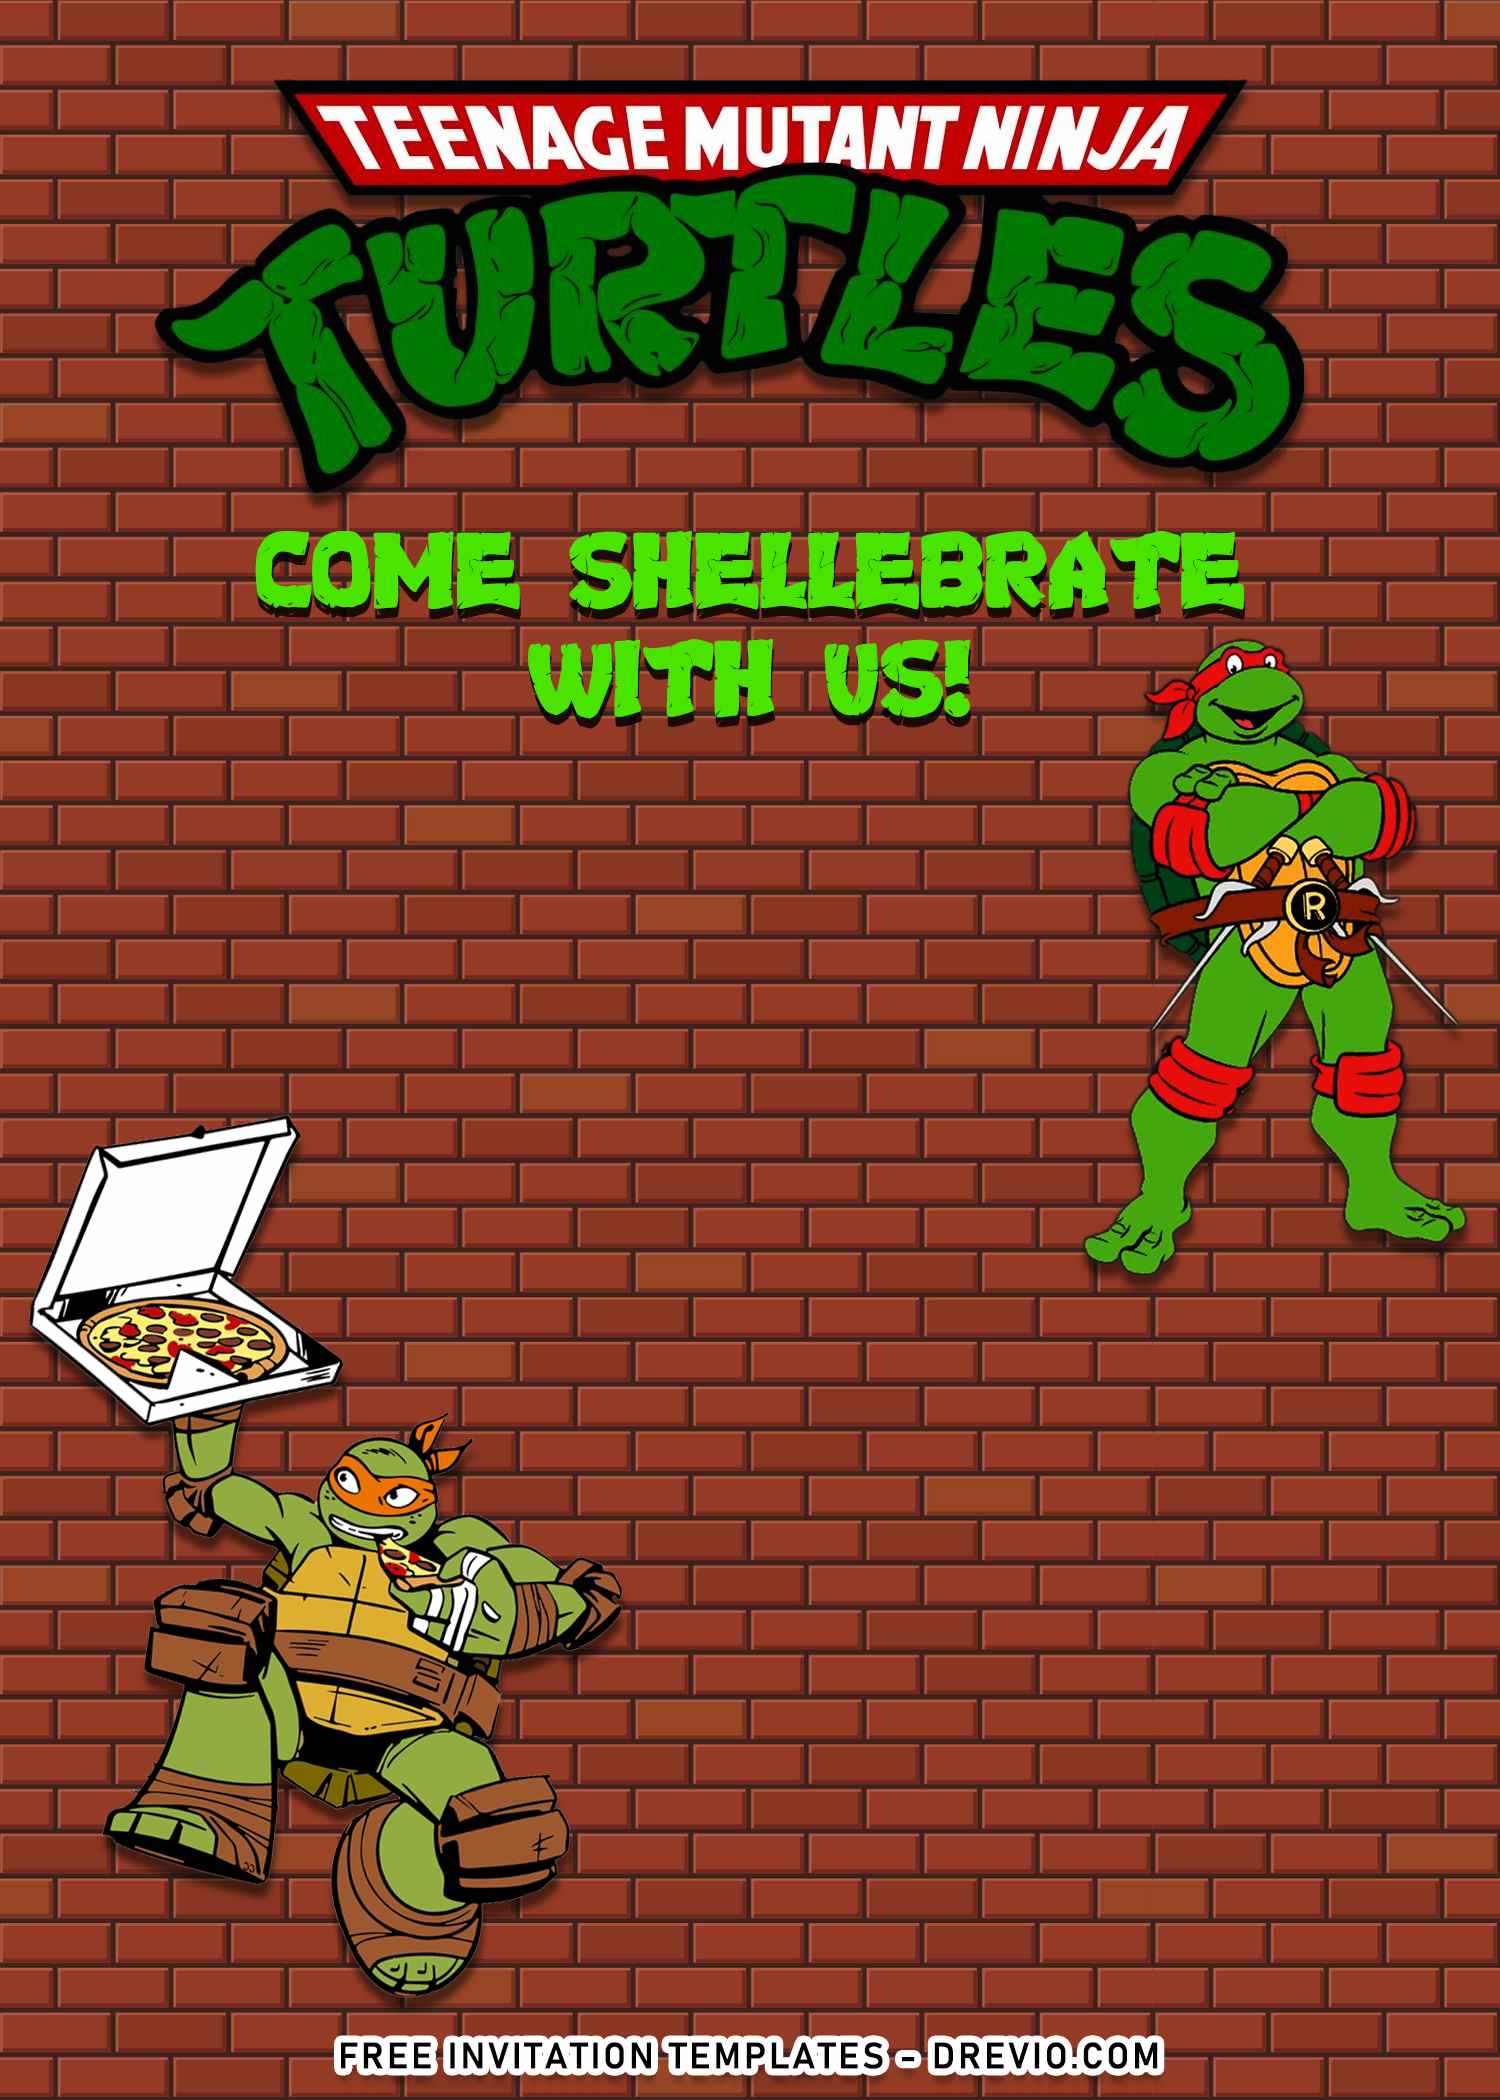 download-now-free-printable-ninja-turtle-birthday-party-invitations